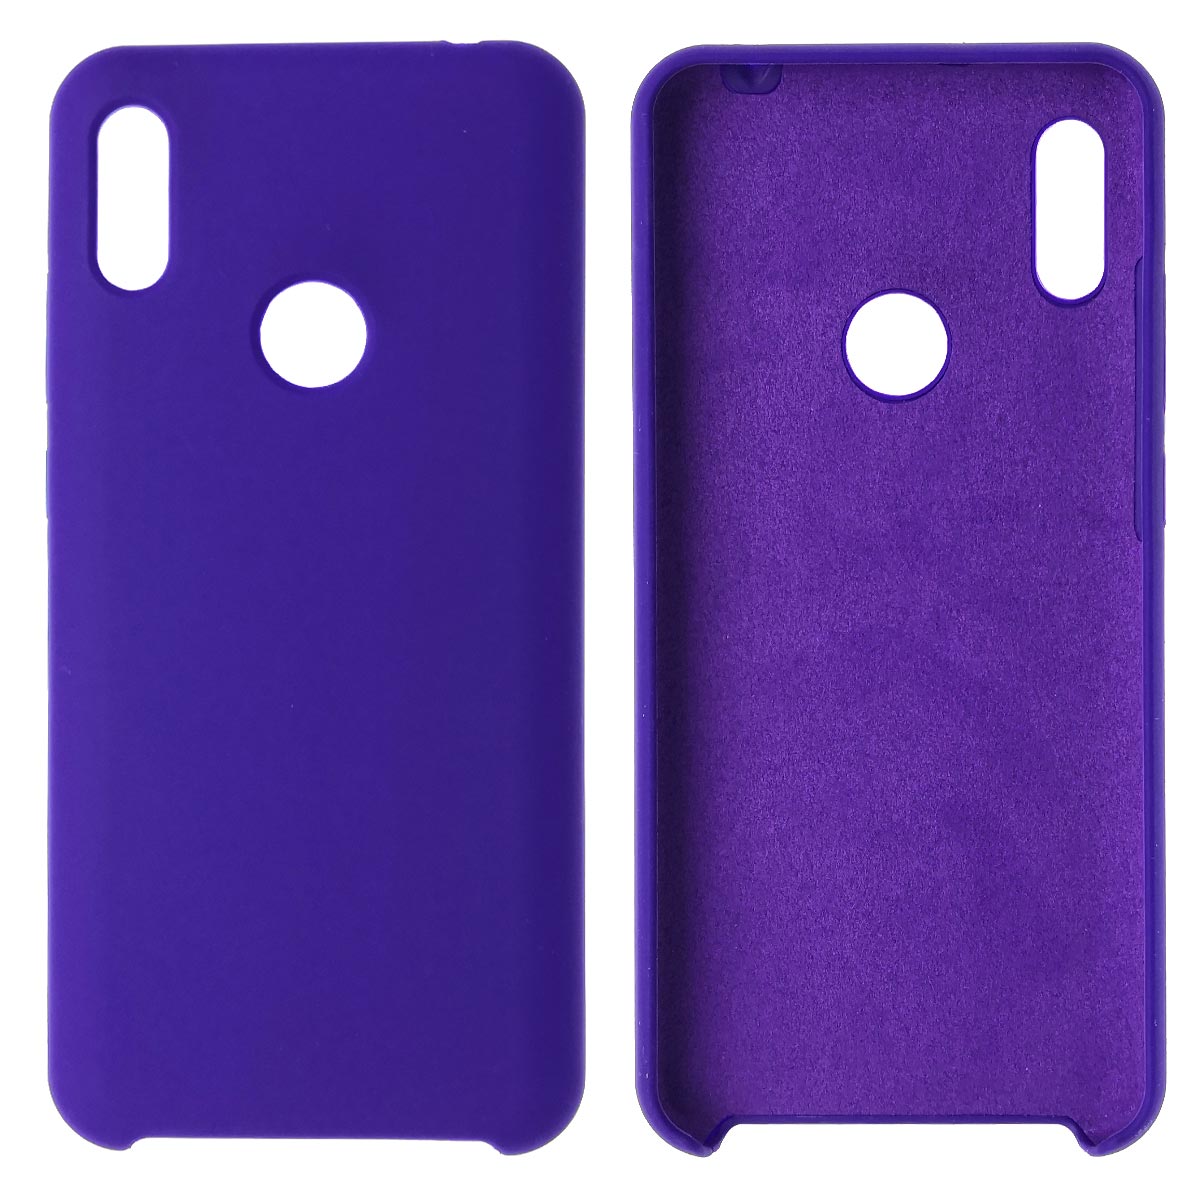 Чехол накладка Silicon Cover для HUAWEI Honor 8A, Y6 2019, силикон, бархат, цвет фиолетовый